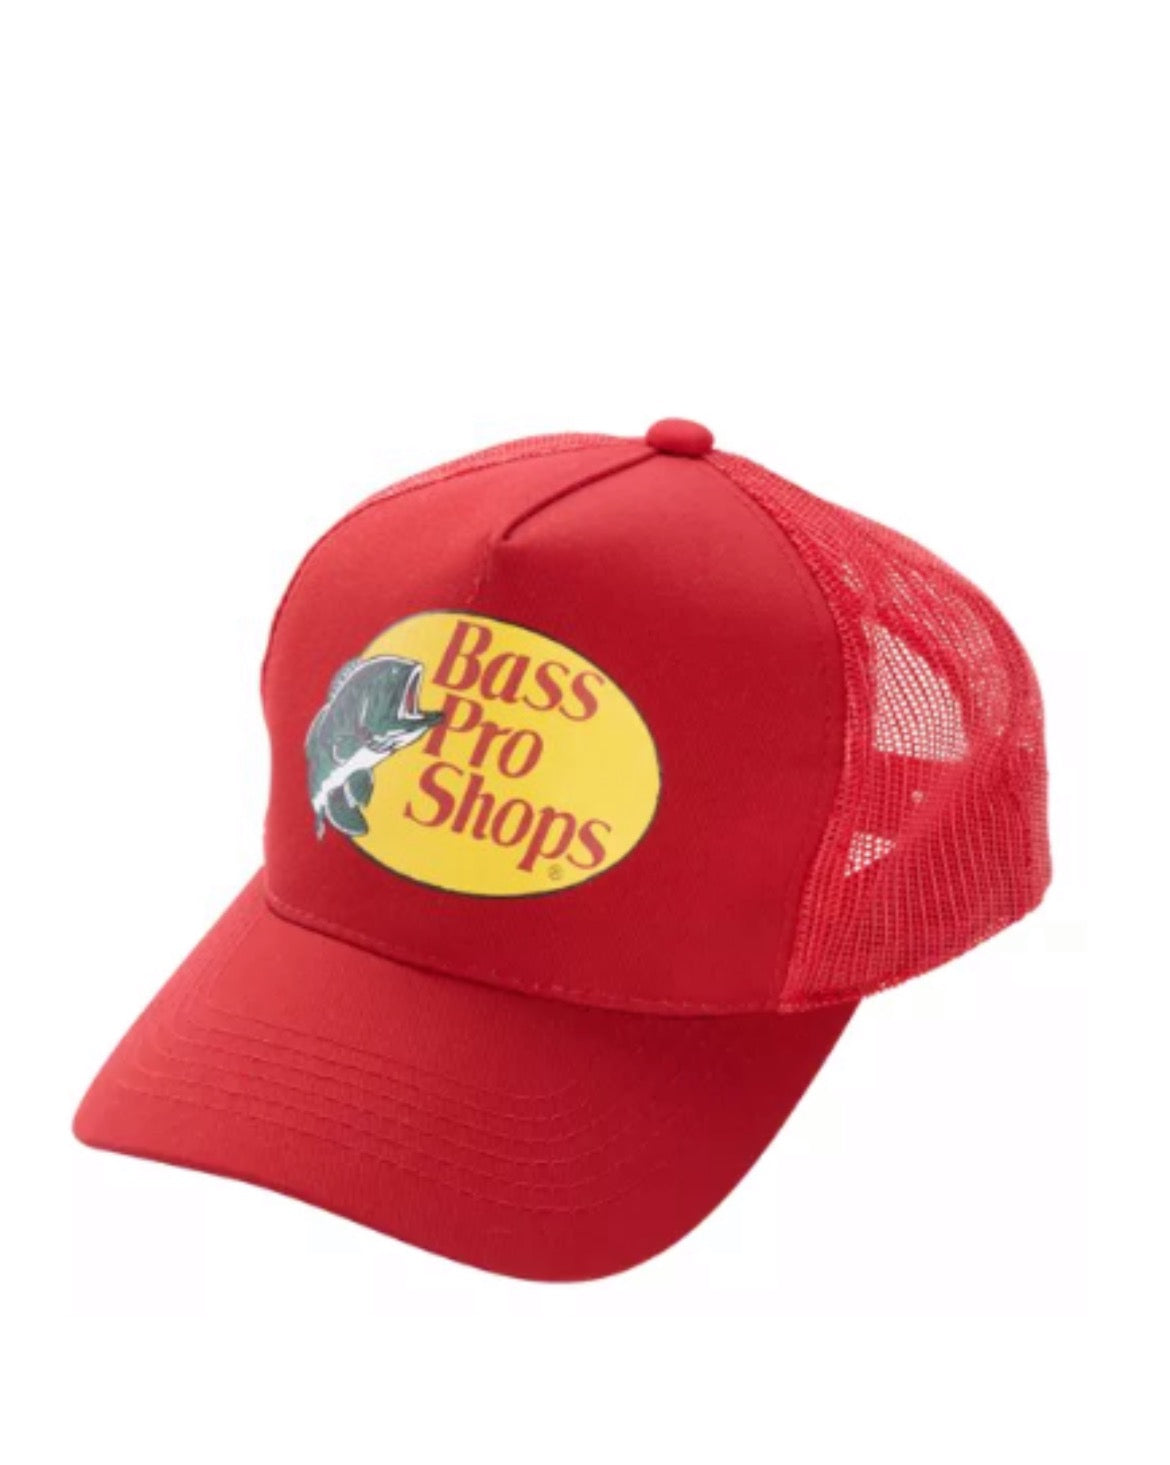 Bass Pro Shops Mesh Cap Cardinal